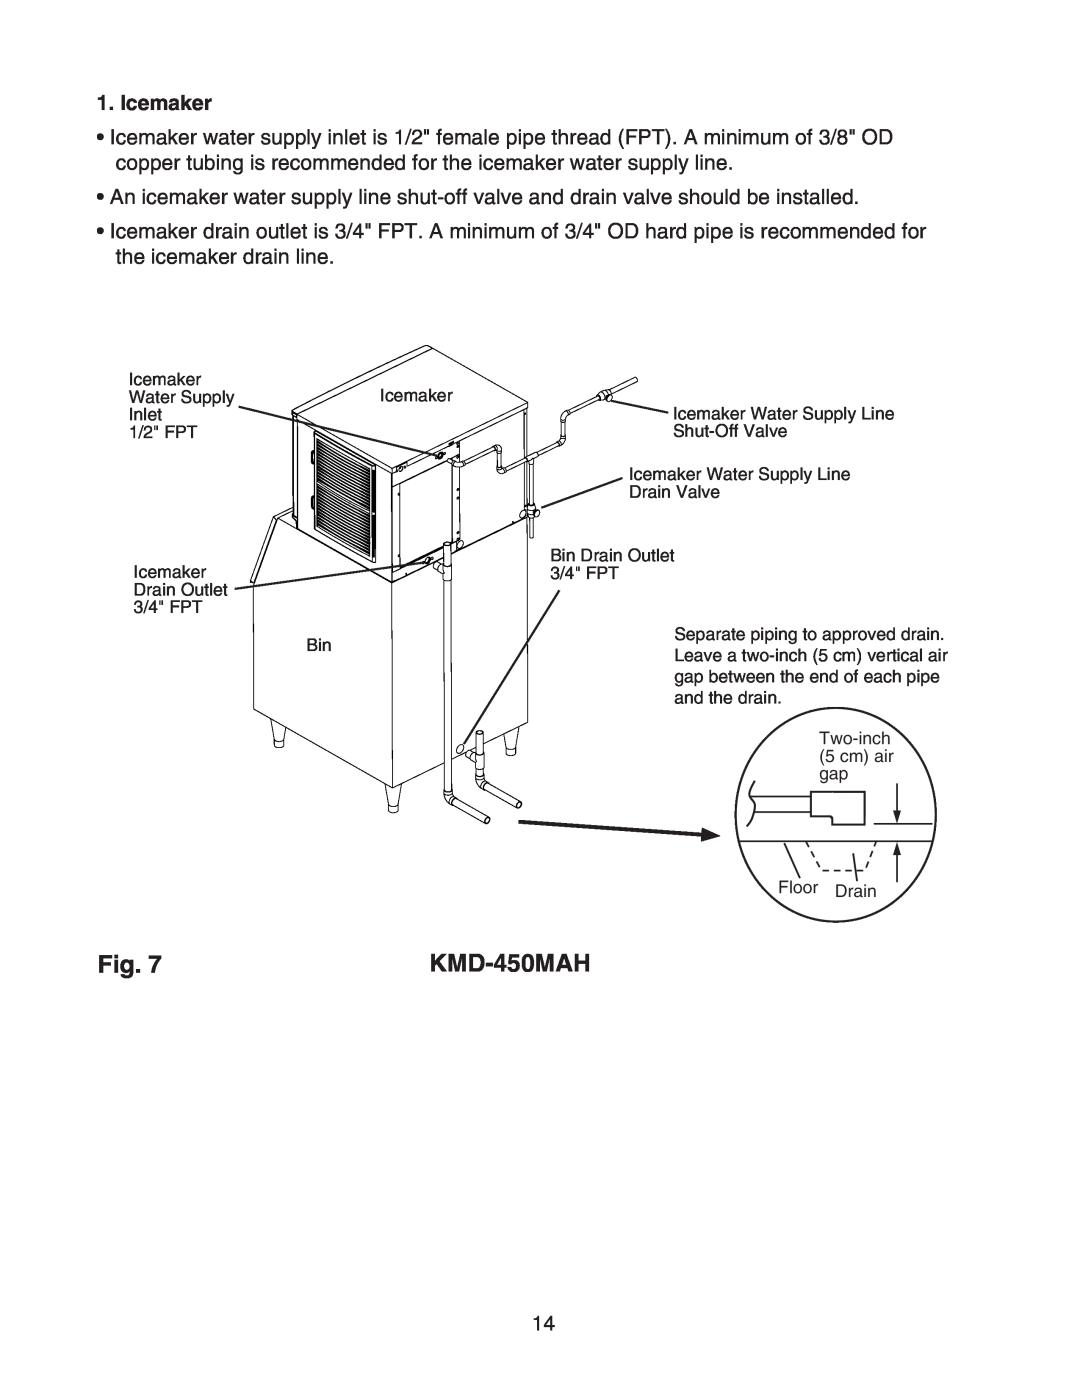 Hoshizaki KMD-450MWH instruction manual KMD-450MAH, Icemaker 